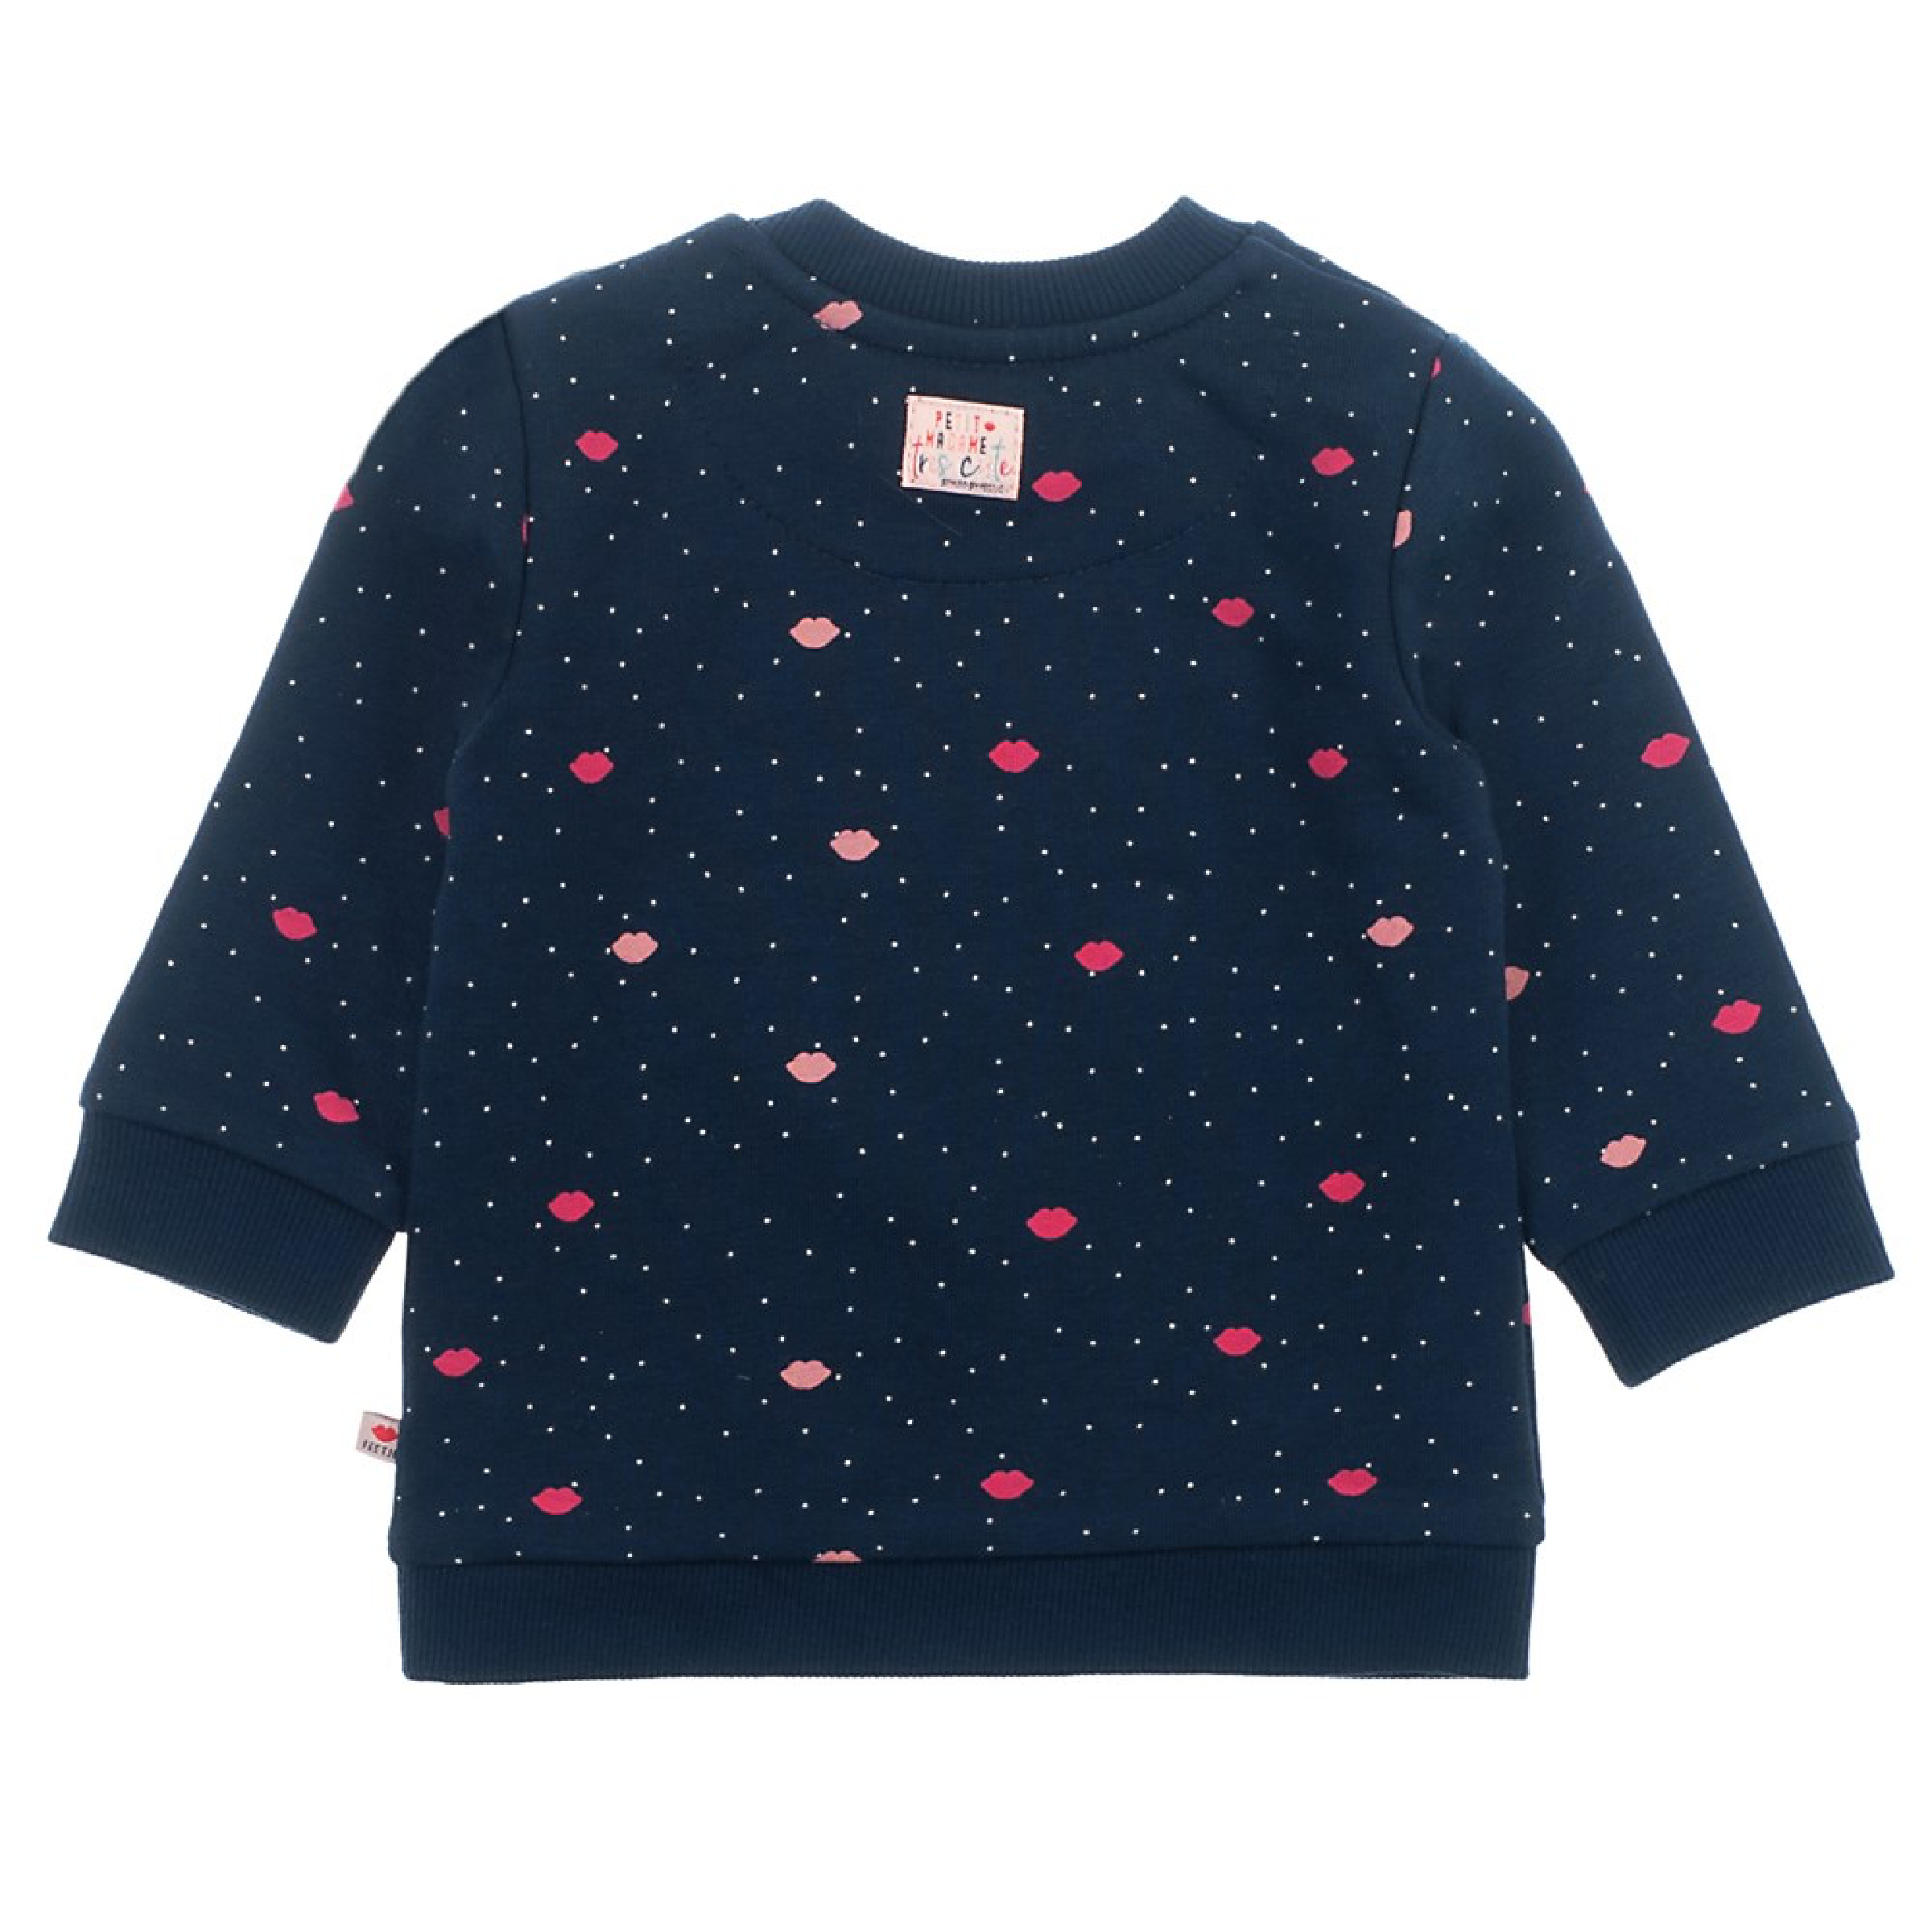 Meisjes Sweater Amour - Mon Petit van Feetje in de kleur Marine in maat 86.